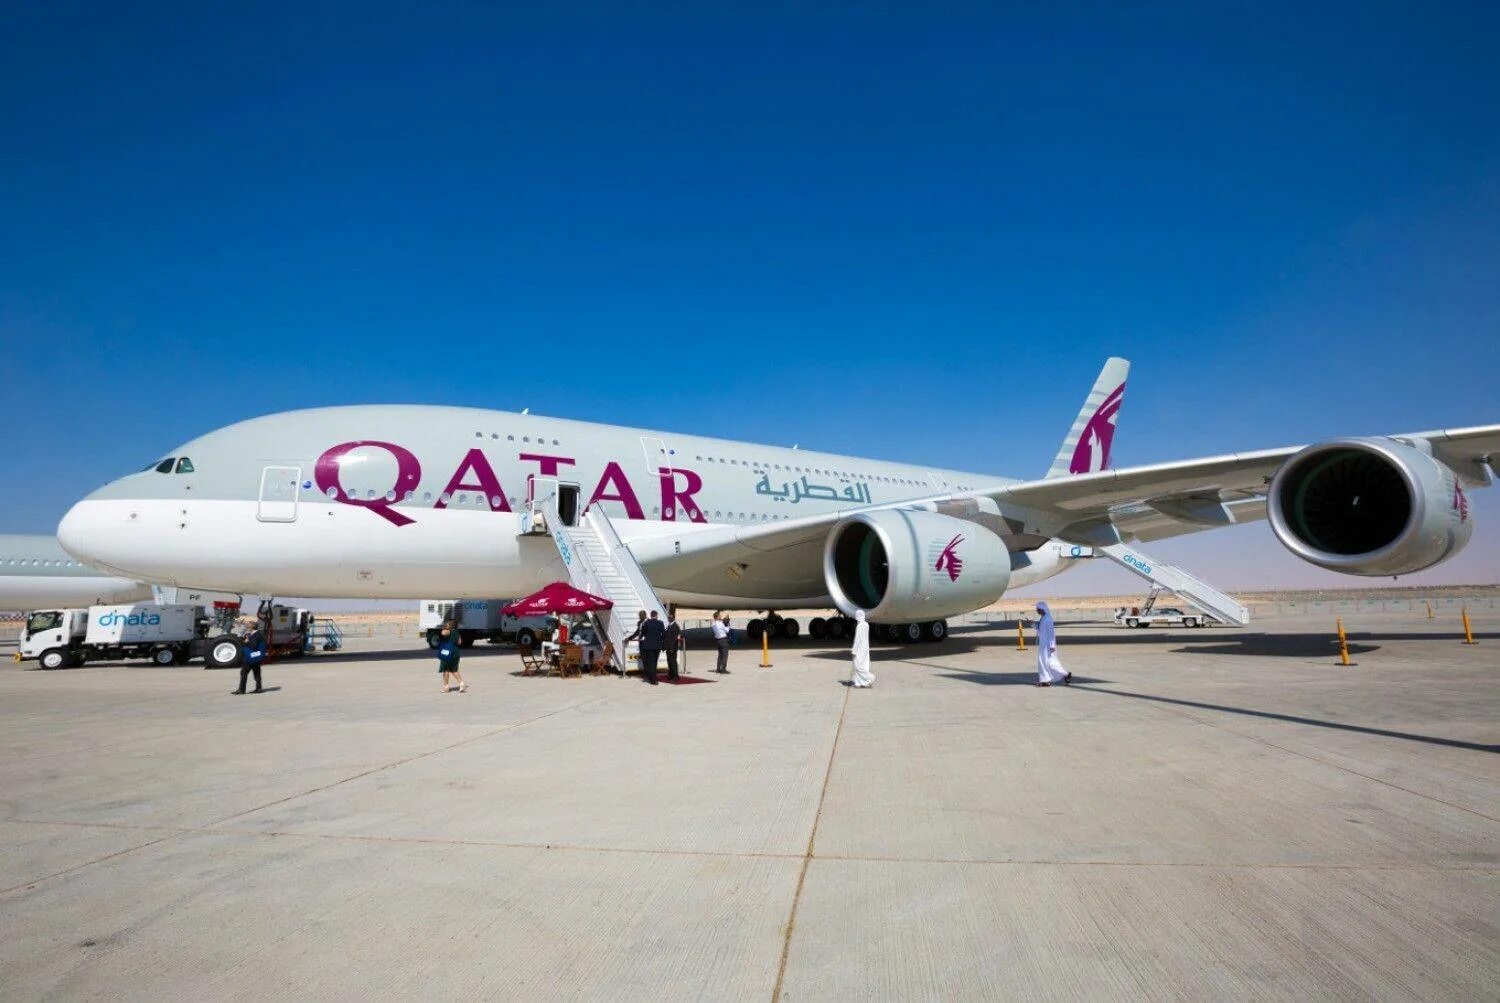 Катар дав. Катар Эйрлайнс самолеты. Самолет Катар Эйрвейз. Qatar Airways Доха. Аэробус а380 Катар Эйрвейз.